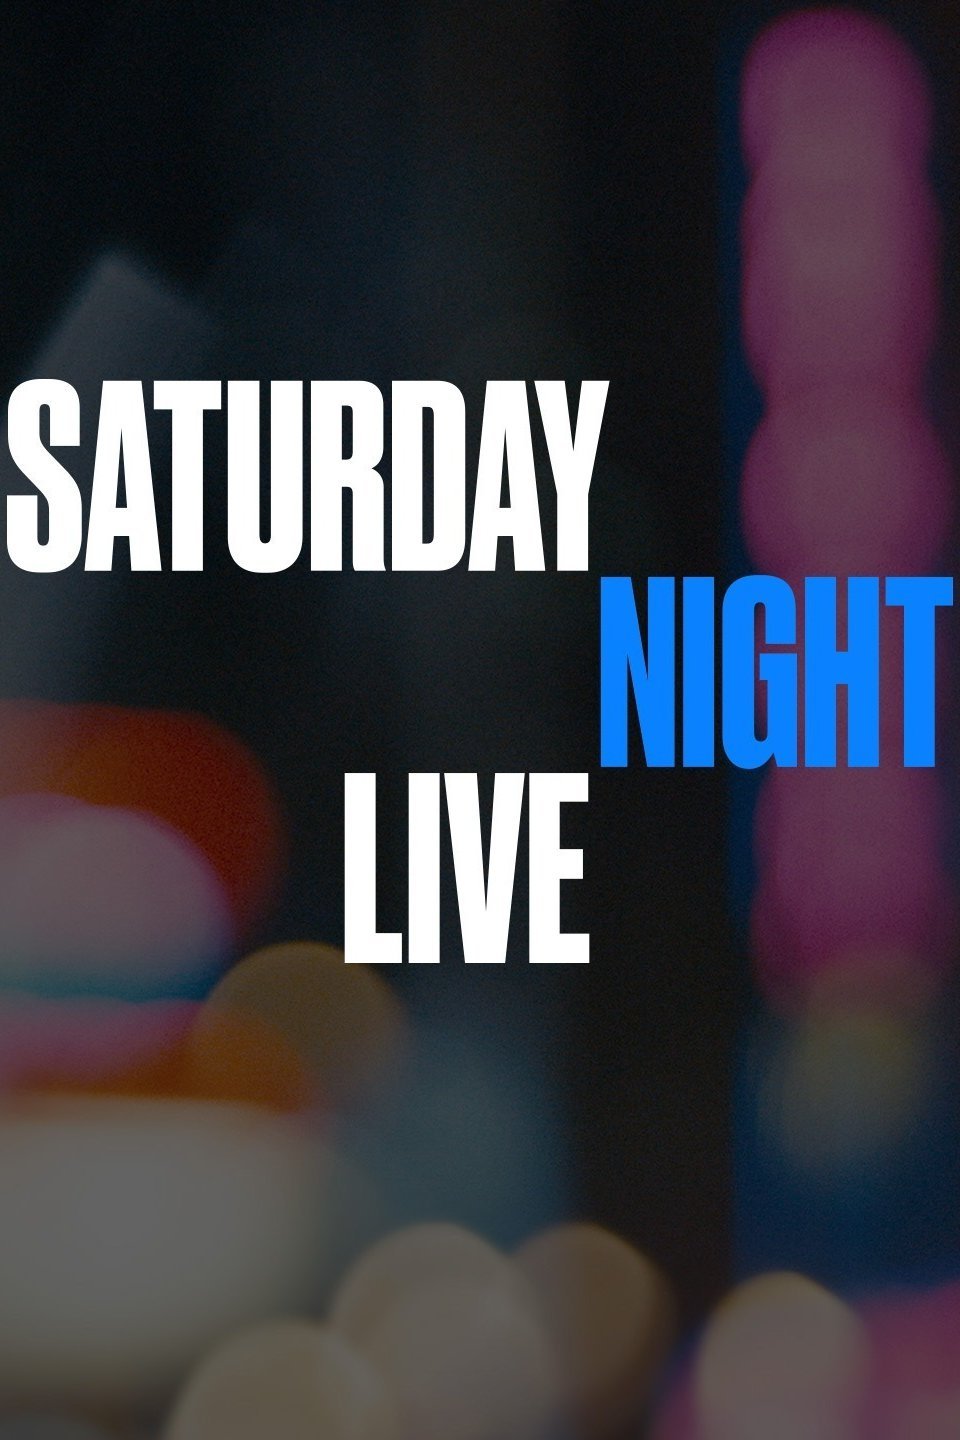 “Saturday Night Live” Lin-Manuel Miranda